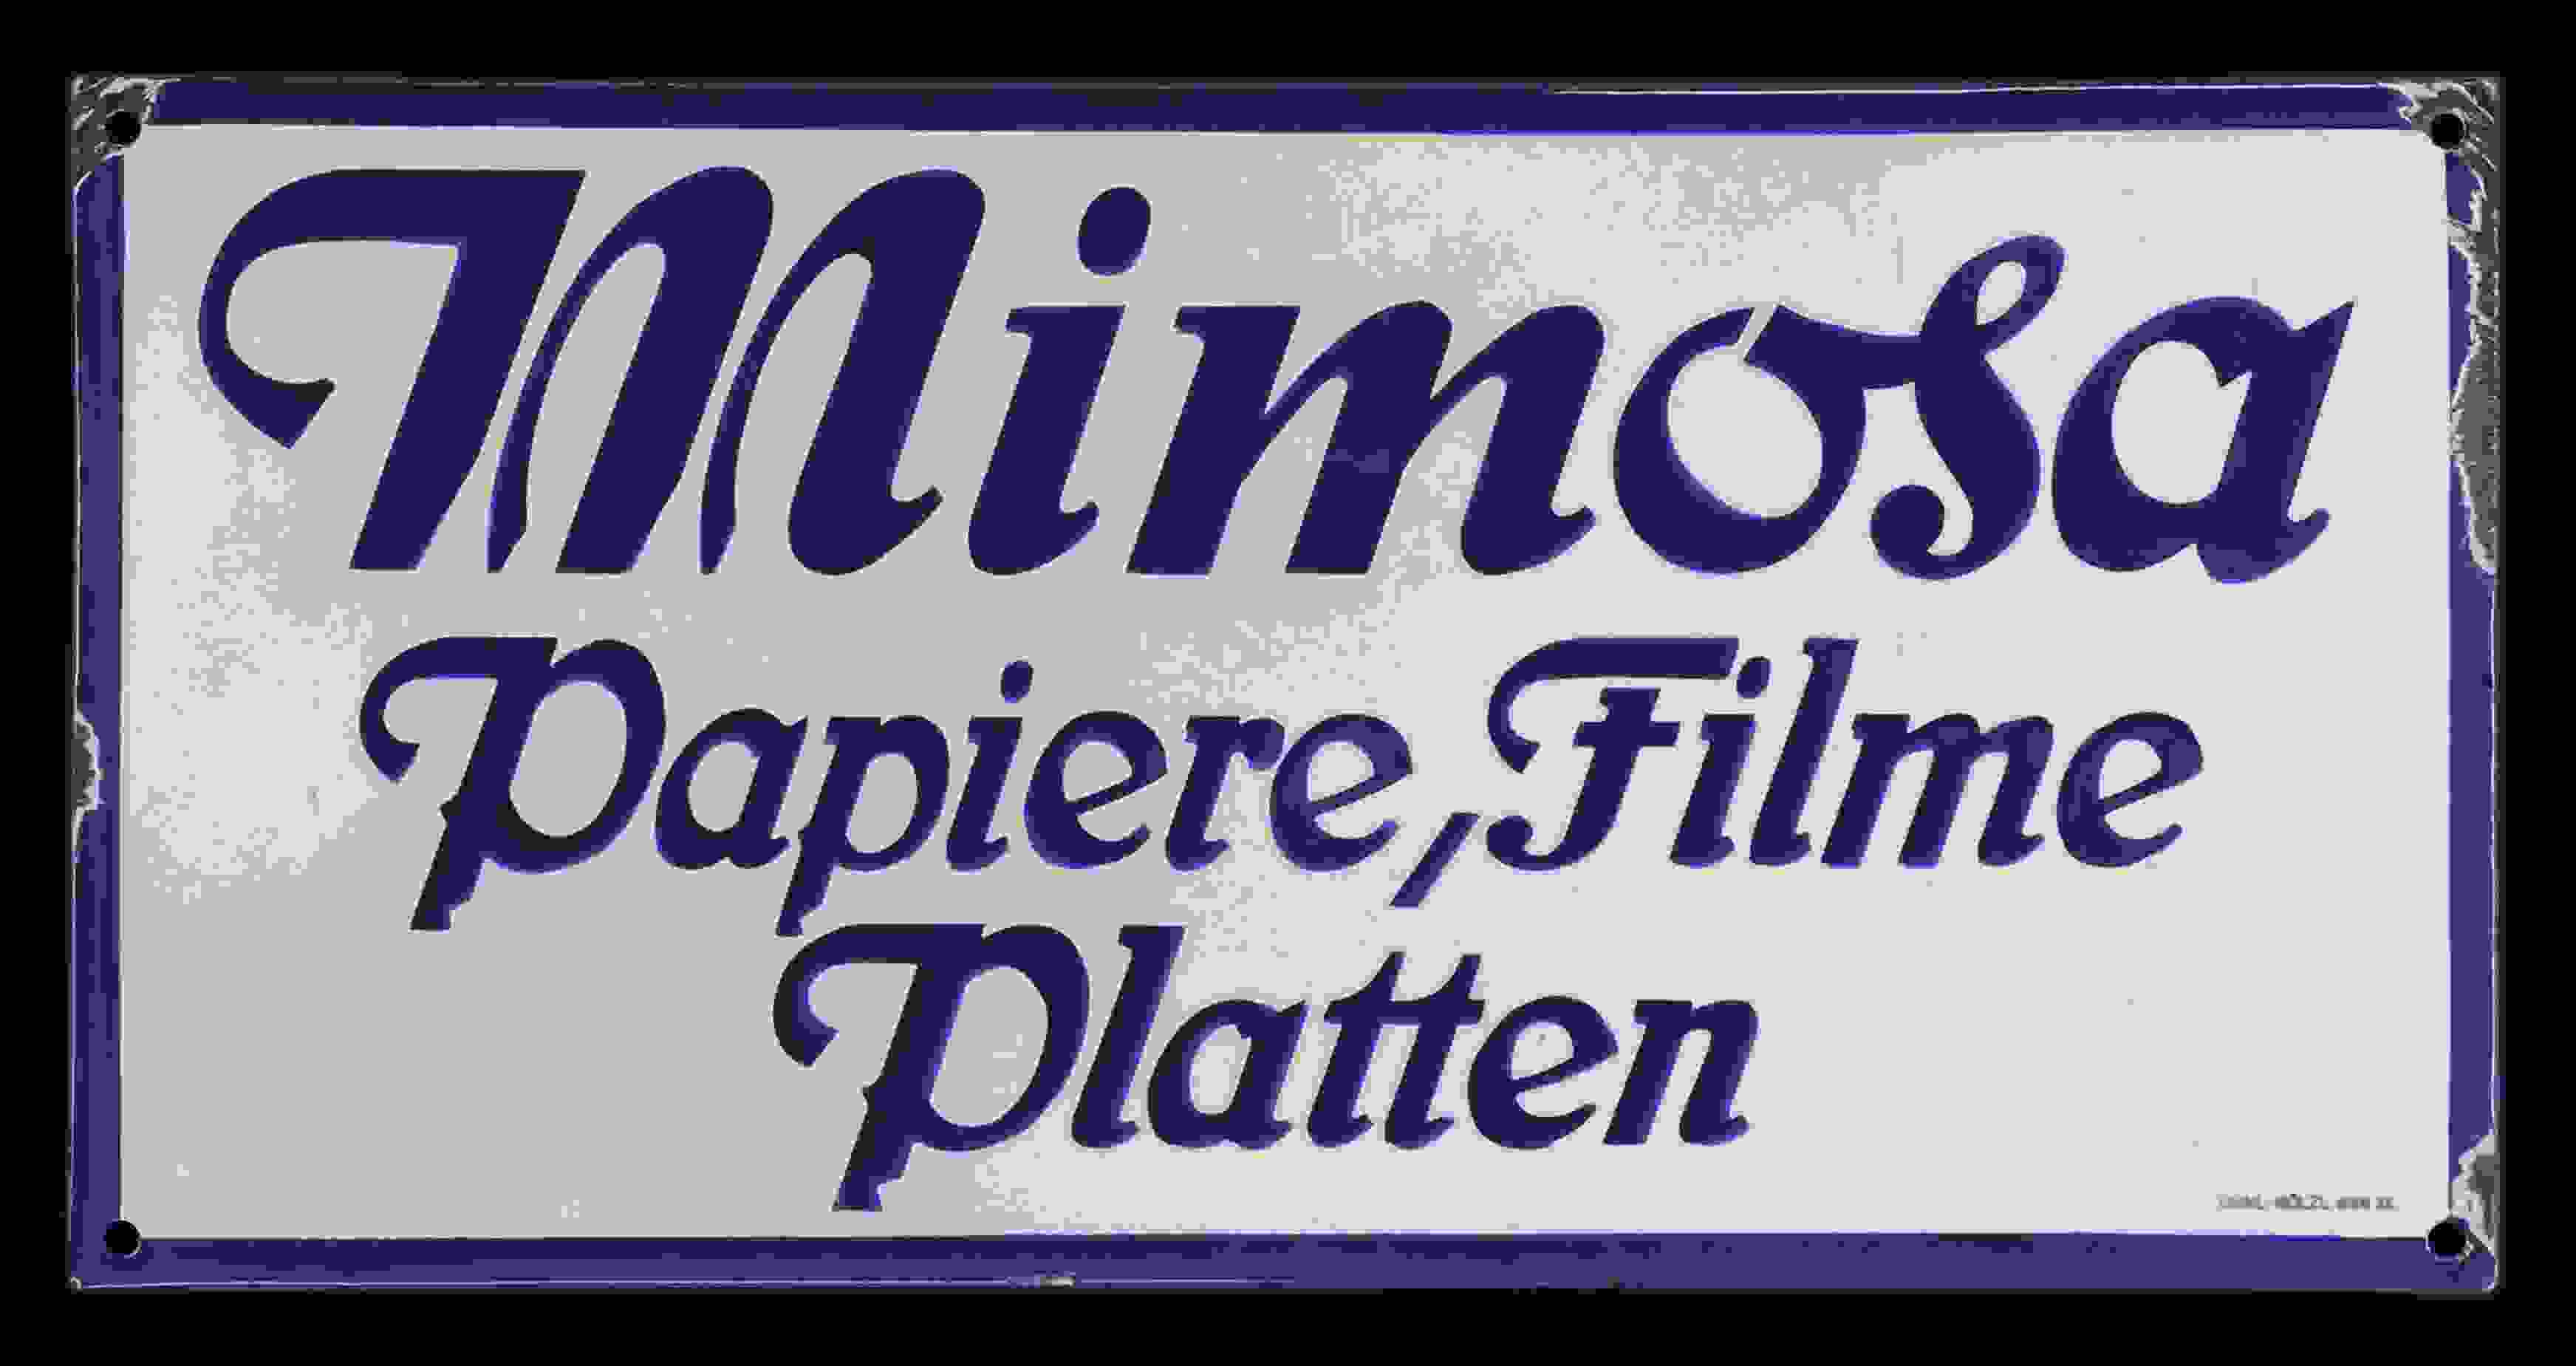 Mimosa Papiere, Filme, Platten 